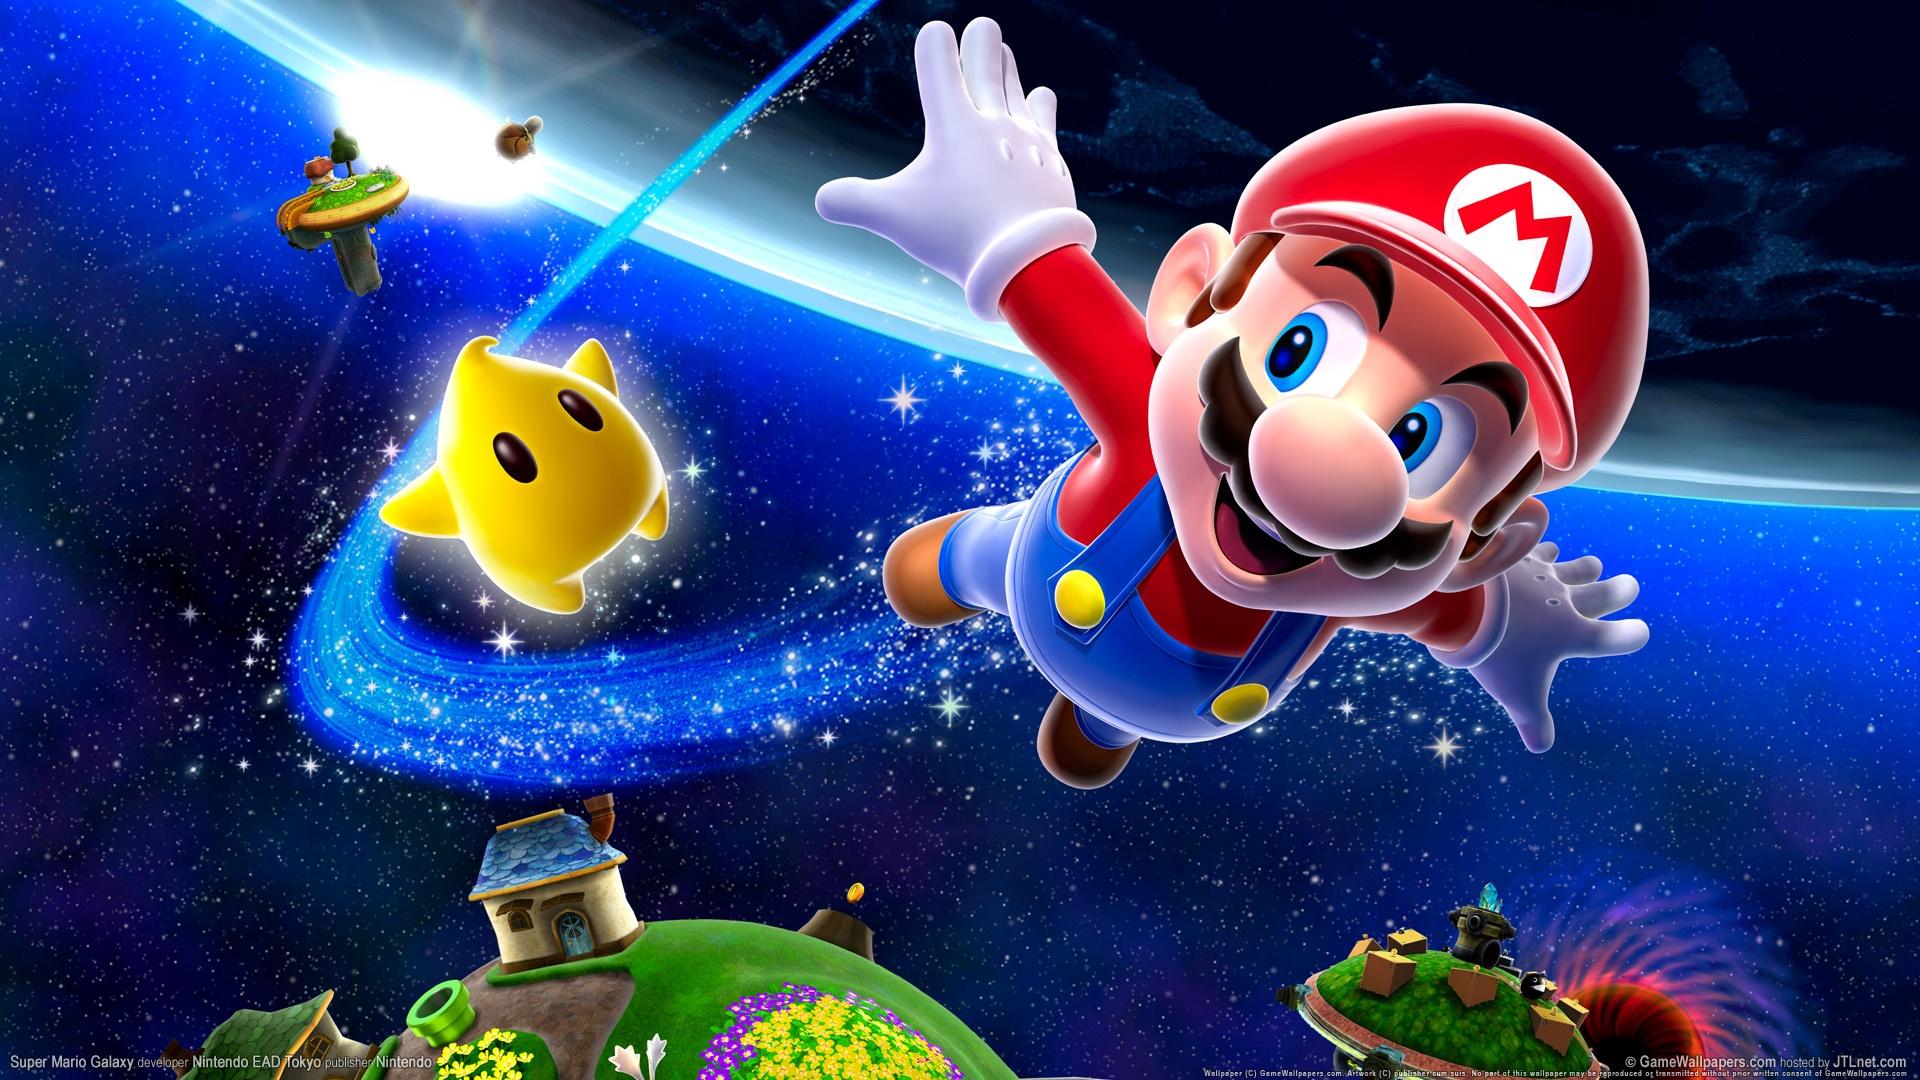 Super Mario Galaxy Wallpaper in jpg format for free download